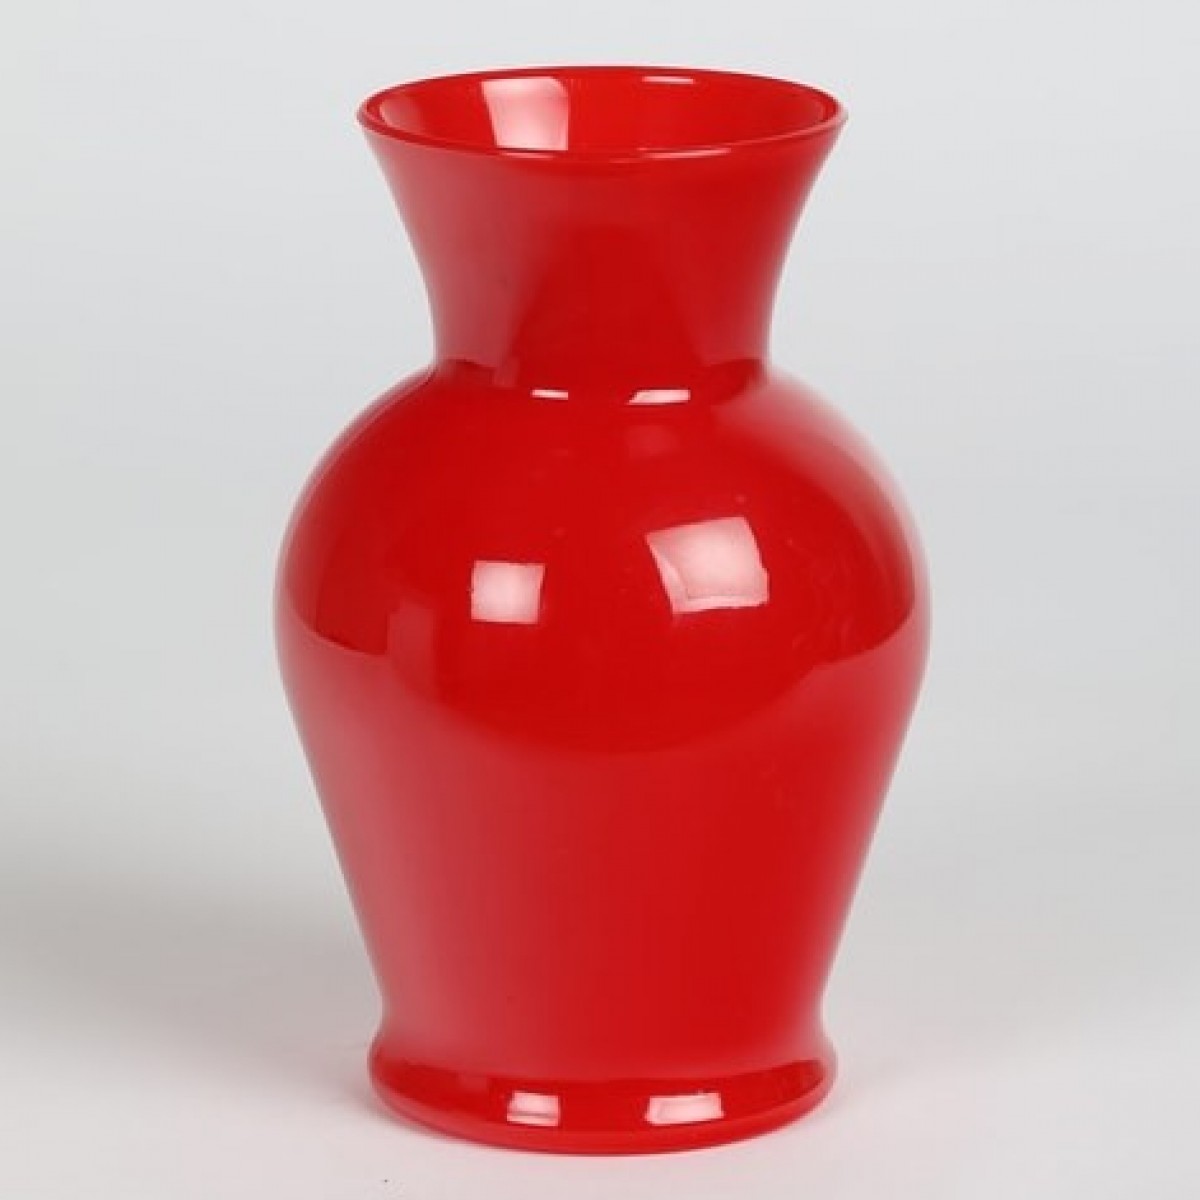 5108 Classic Urn Red 8.5x18cm Acrylic Vase - 1 No